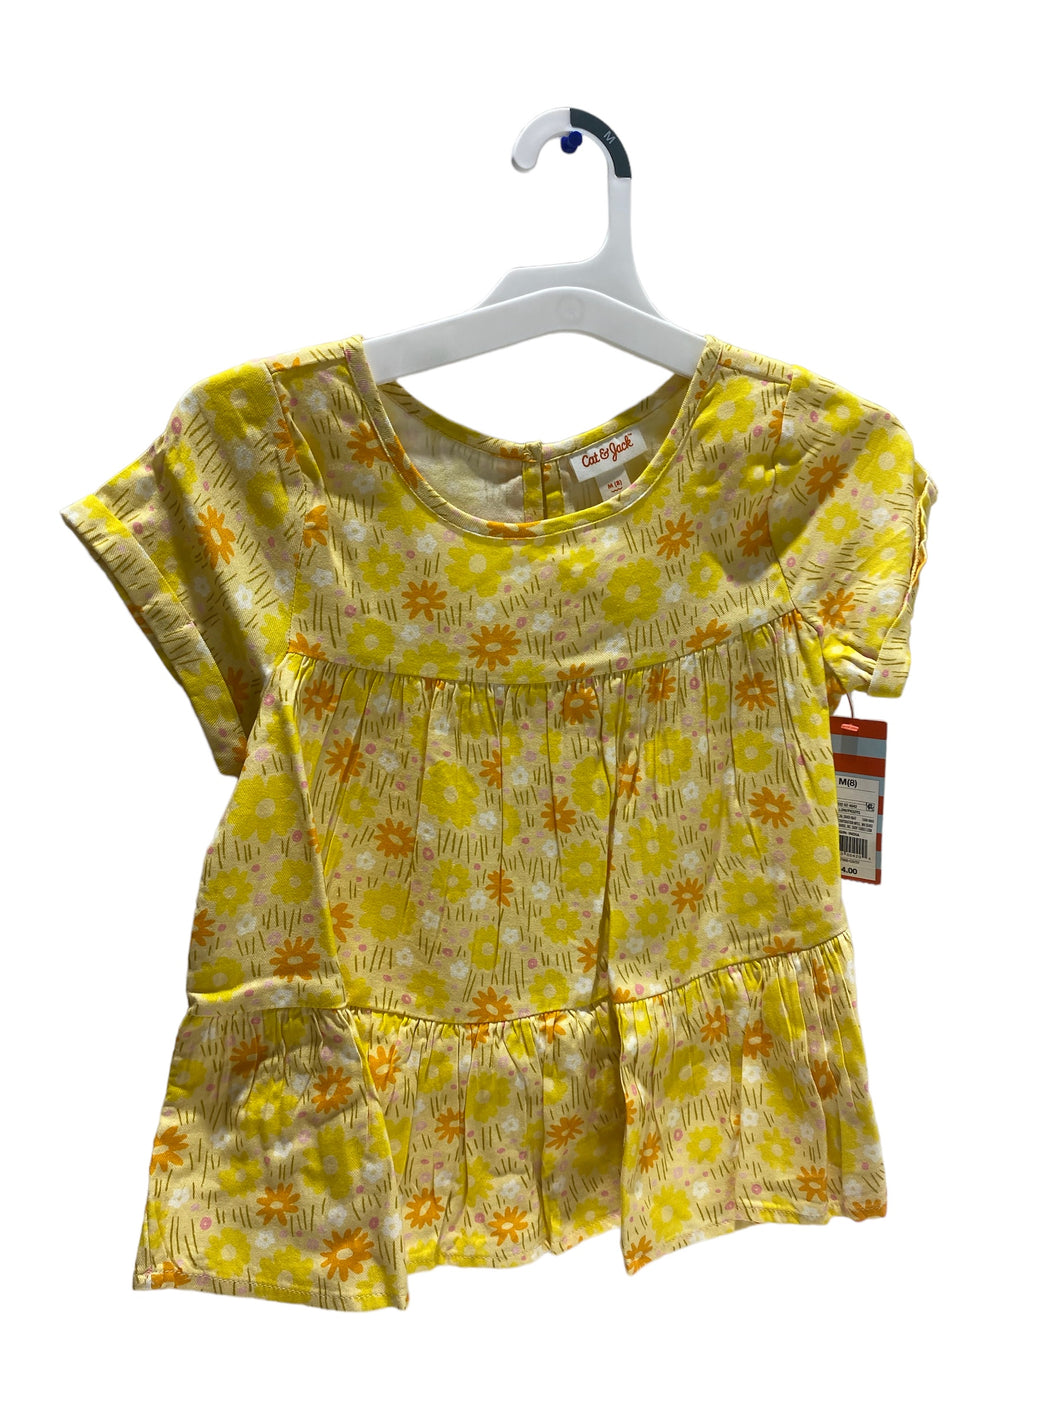 Cat & Jack Yellow/PR32Y5 Short Sleeve Girl's Shirt - Size L (10/12) - FreemanLiquidators - [product_description]